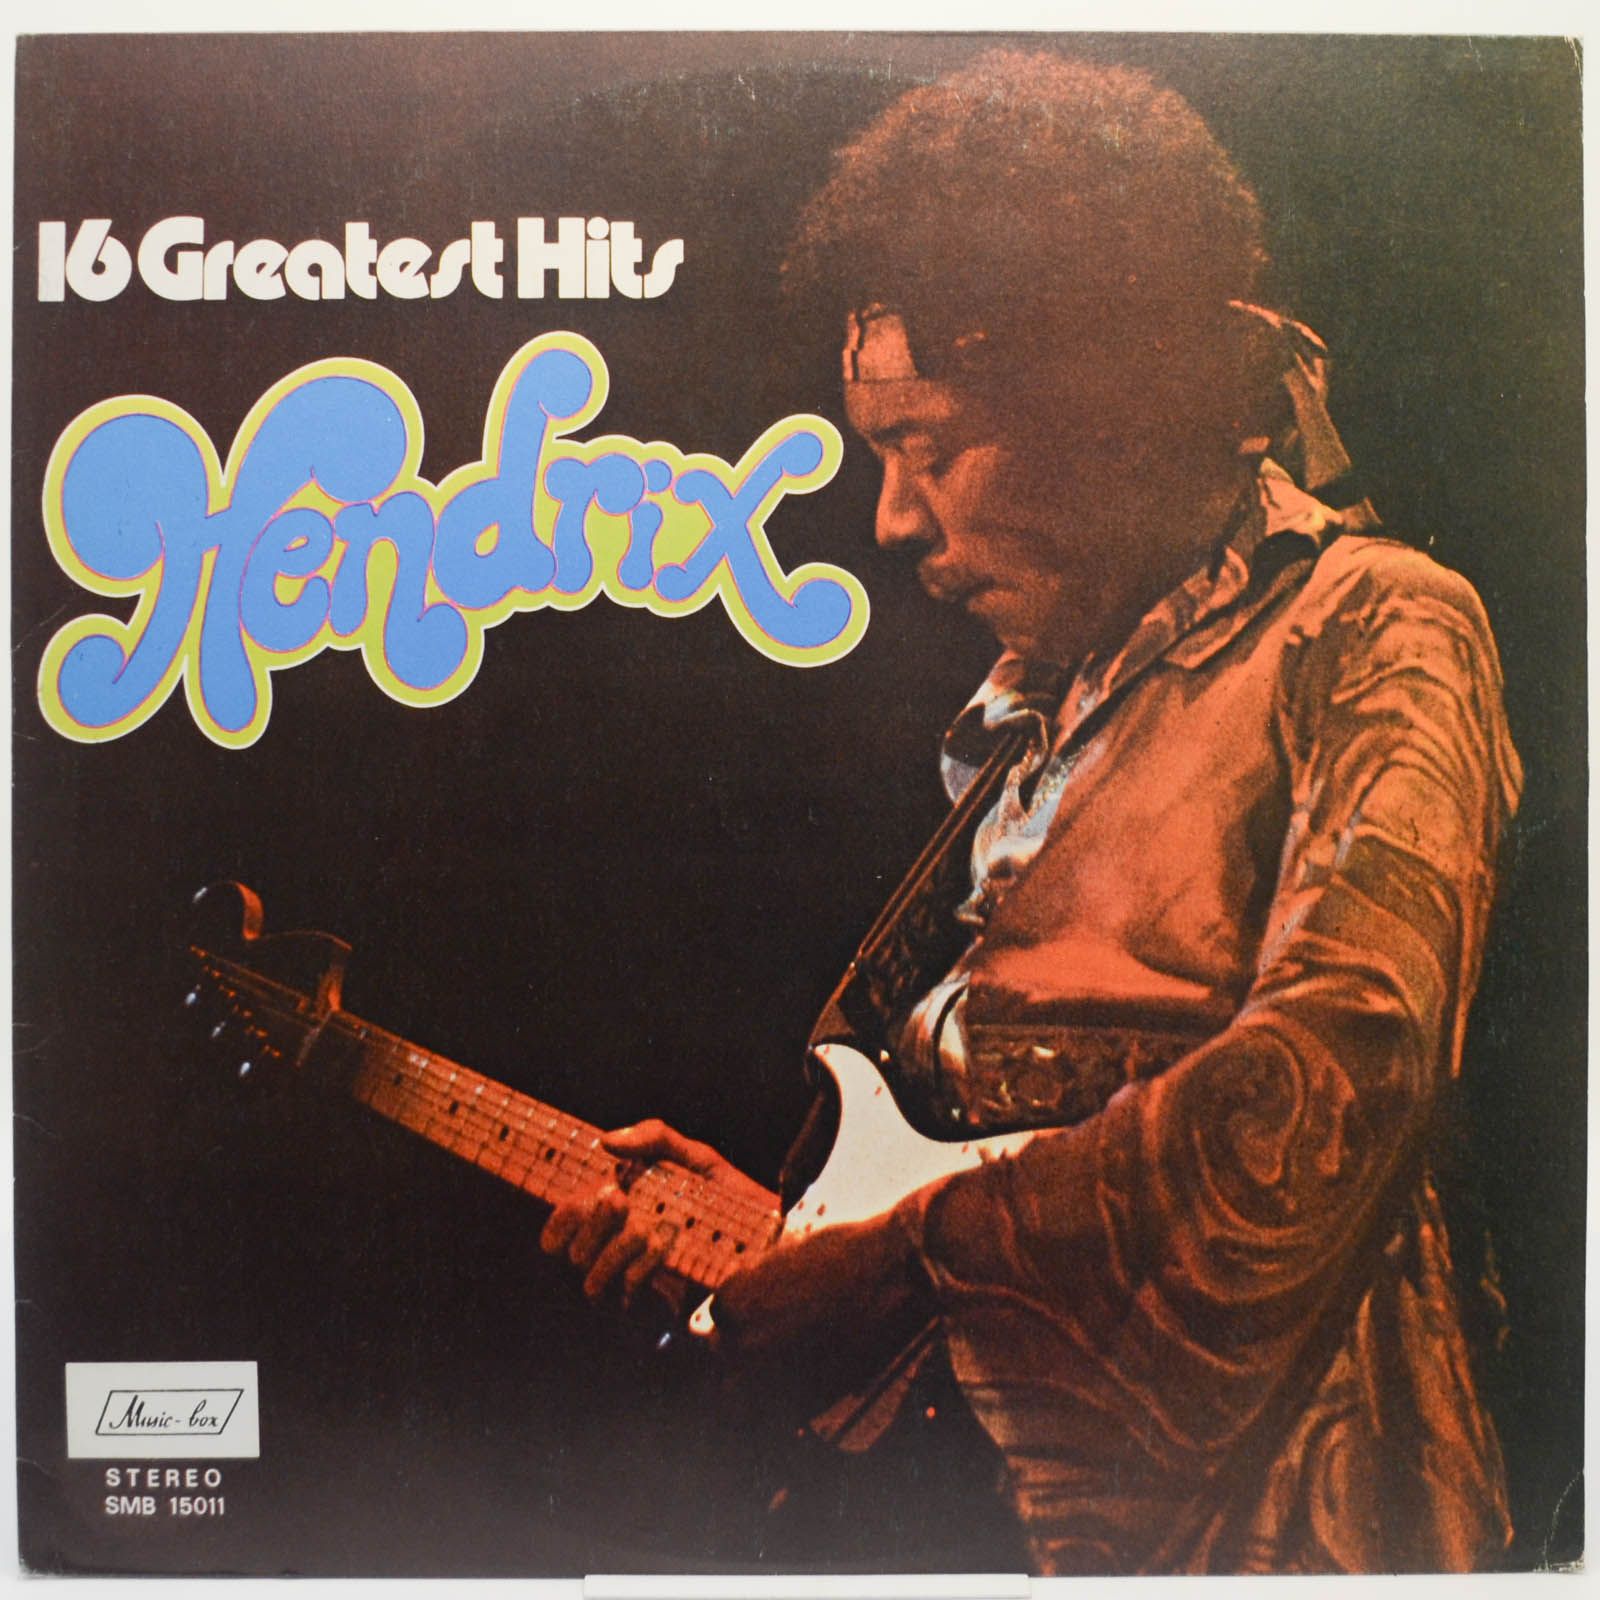 Jimi Hendrix — 16 Greatest Hits, 1976